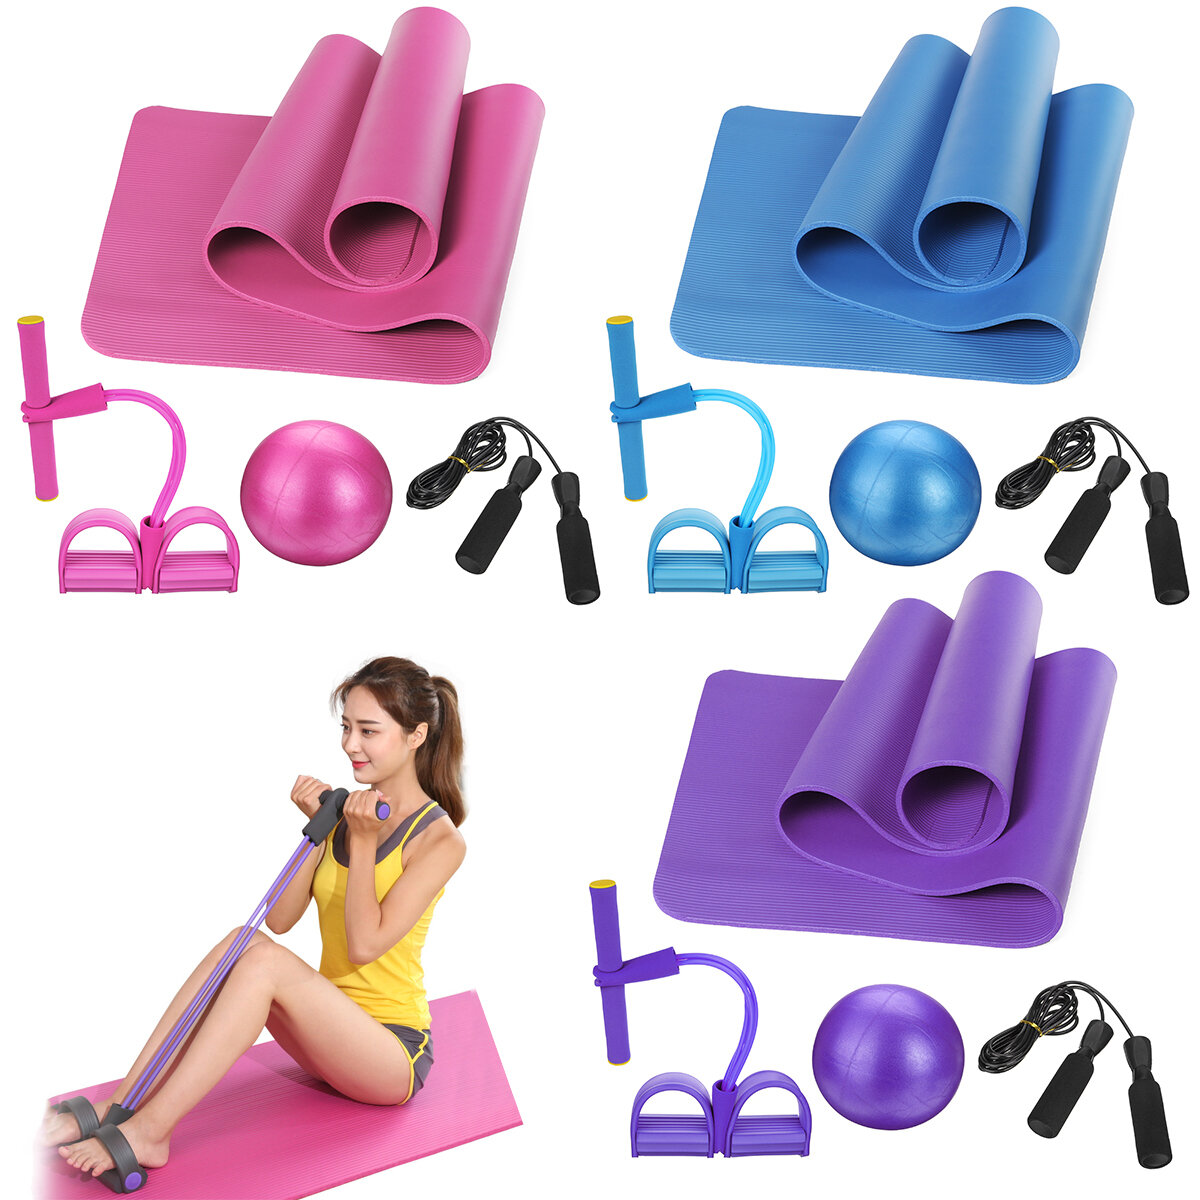 4PCS Yoga Beginner Kit Set Anti-skid Pilates Ball + Jump Rope + Resistance Band + Yoga Mats Home Fit